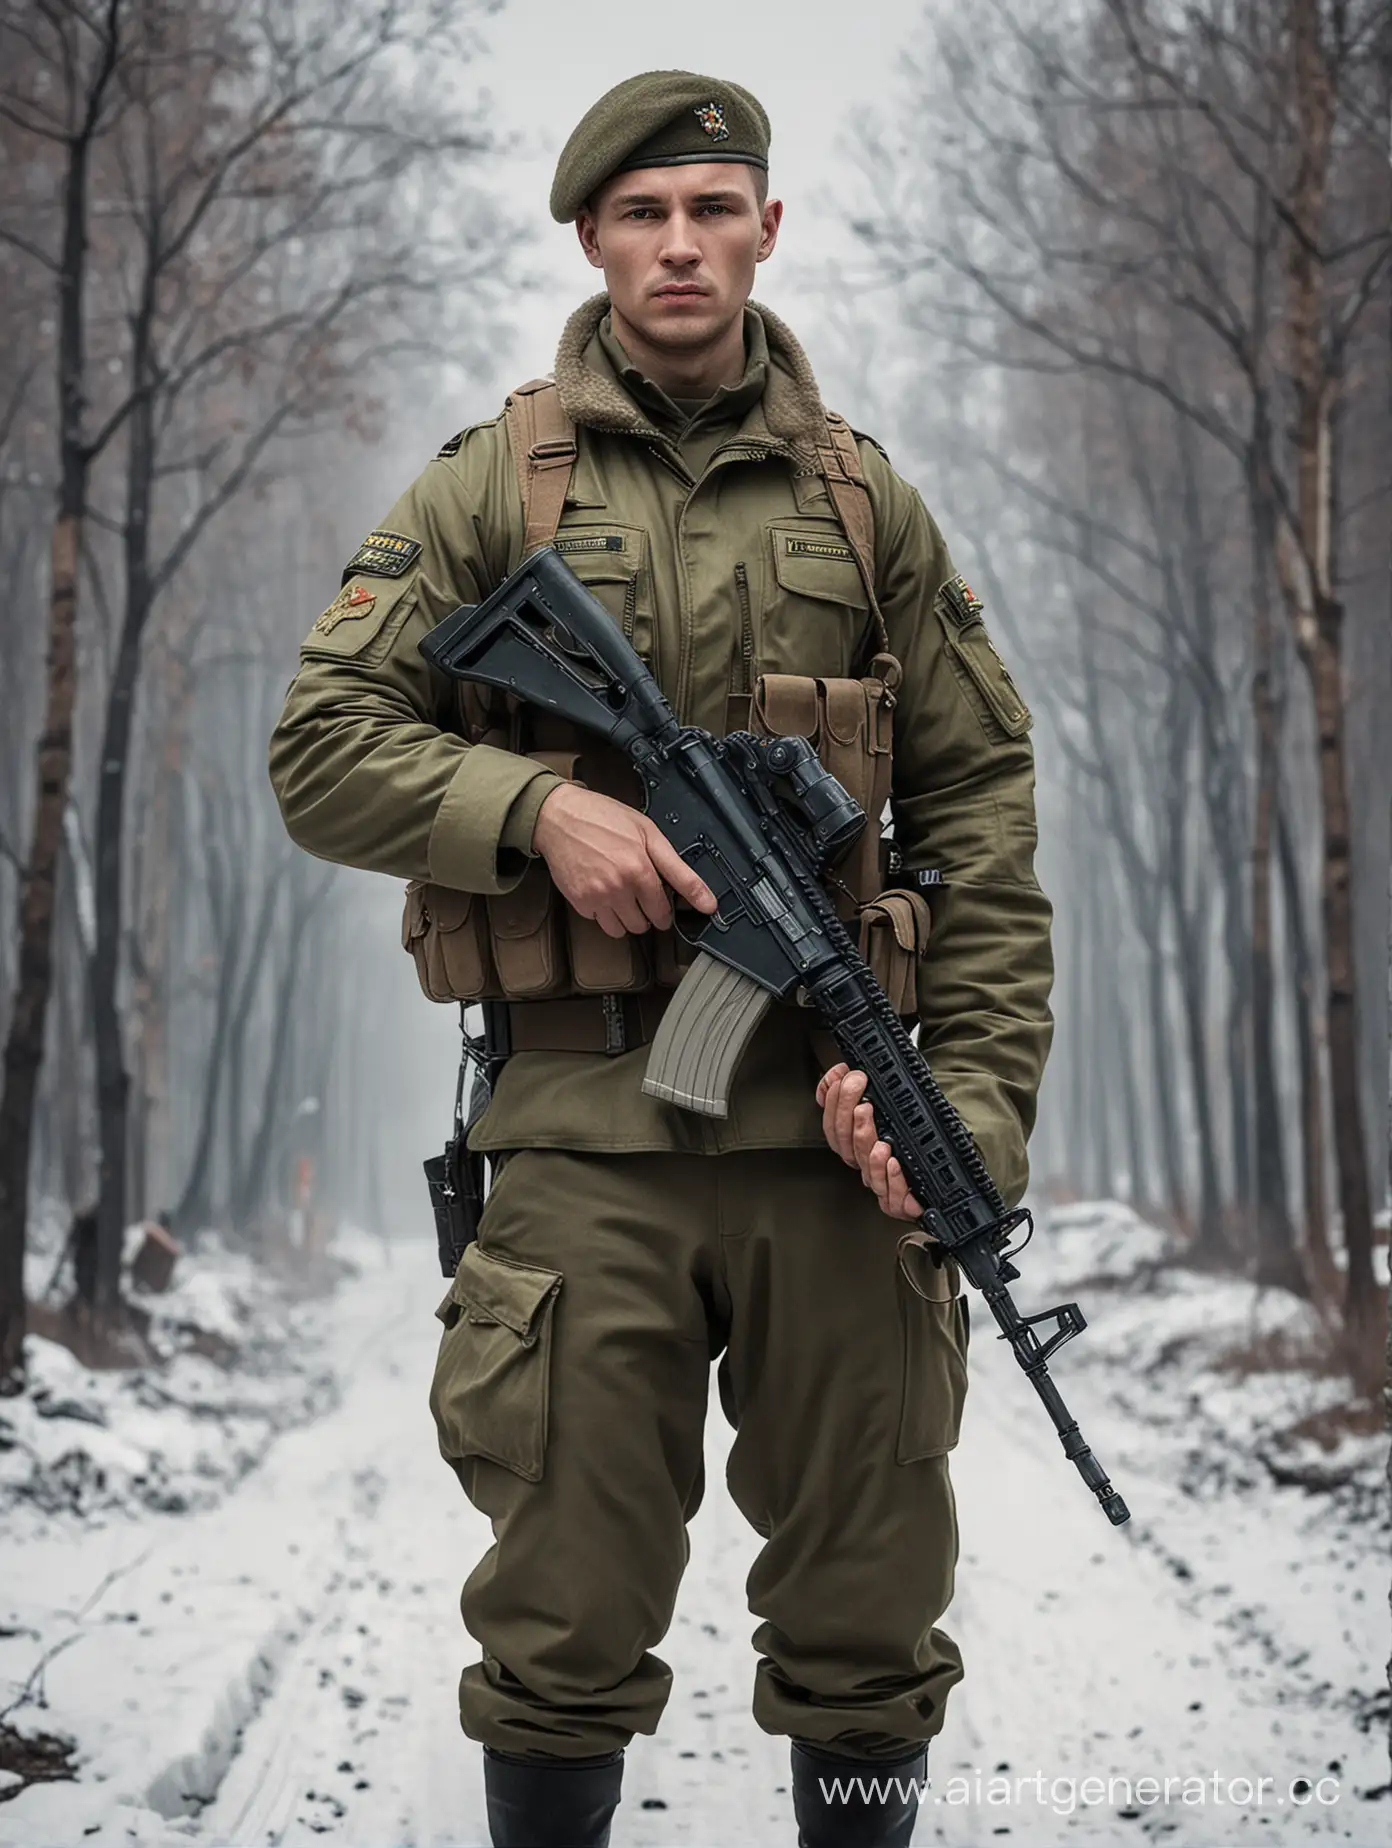 Modern-Russian-Soldier-in-Urban-Camouflage-Gear